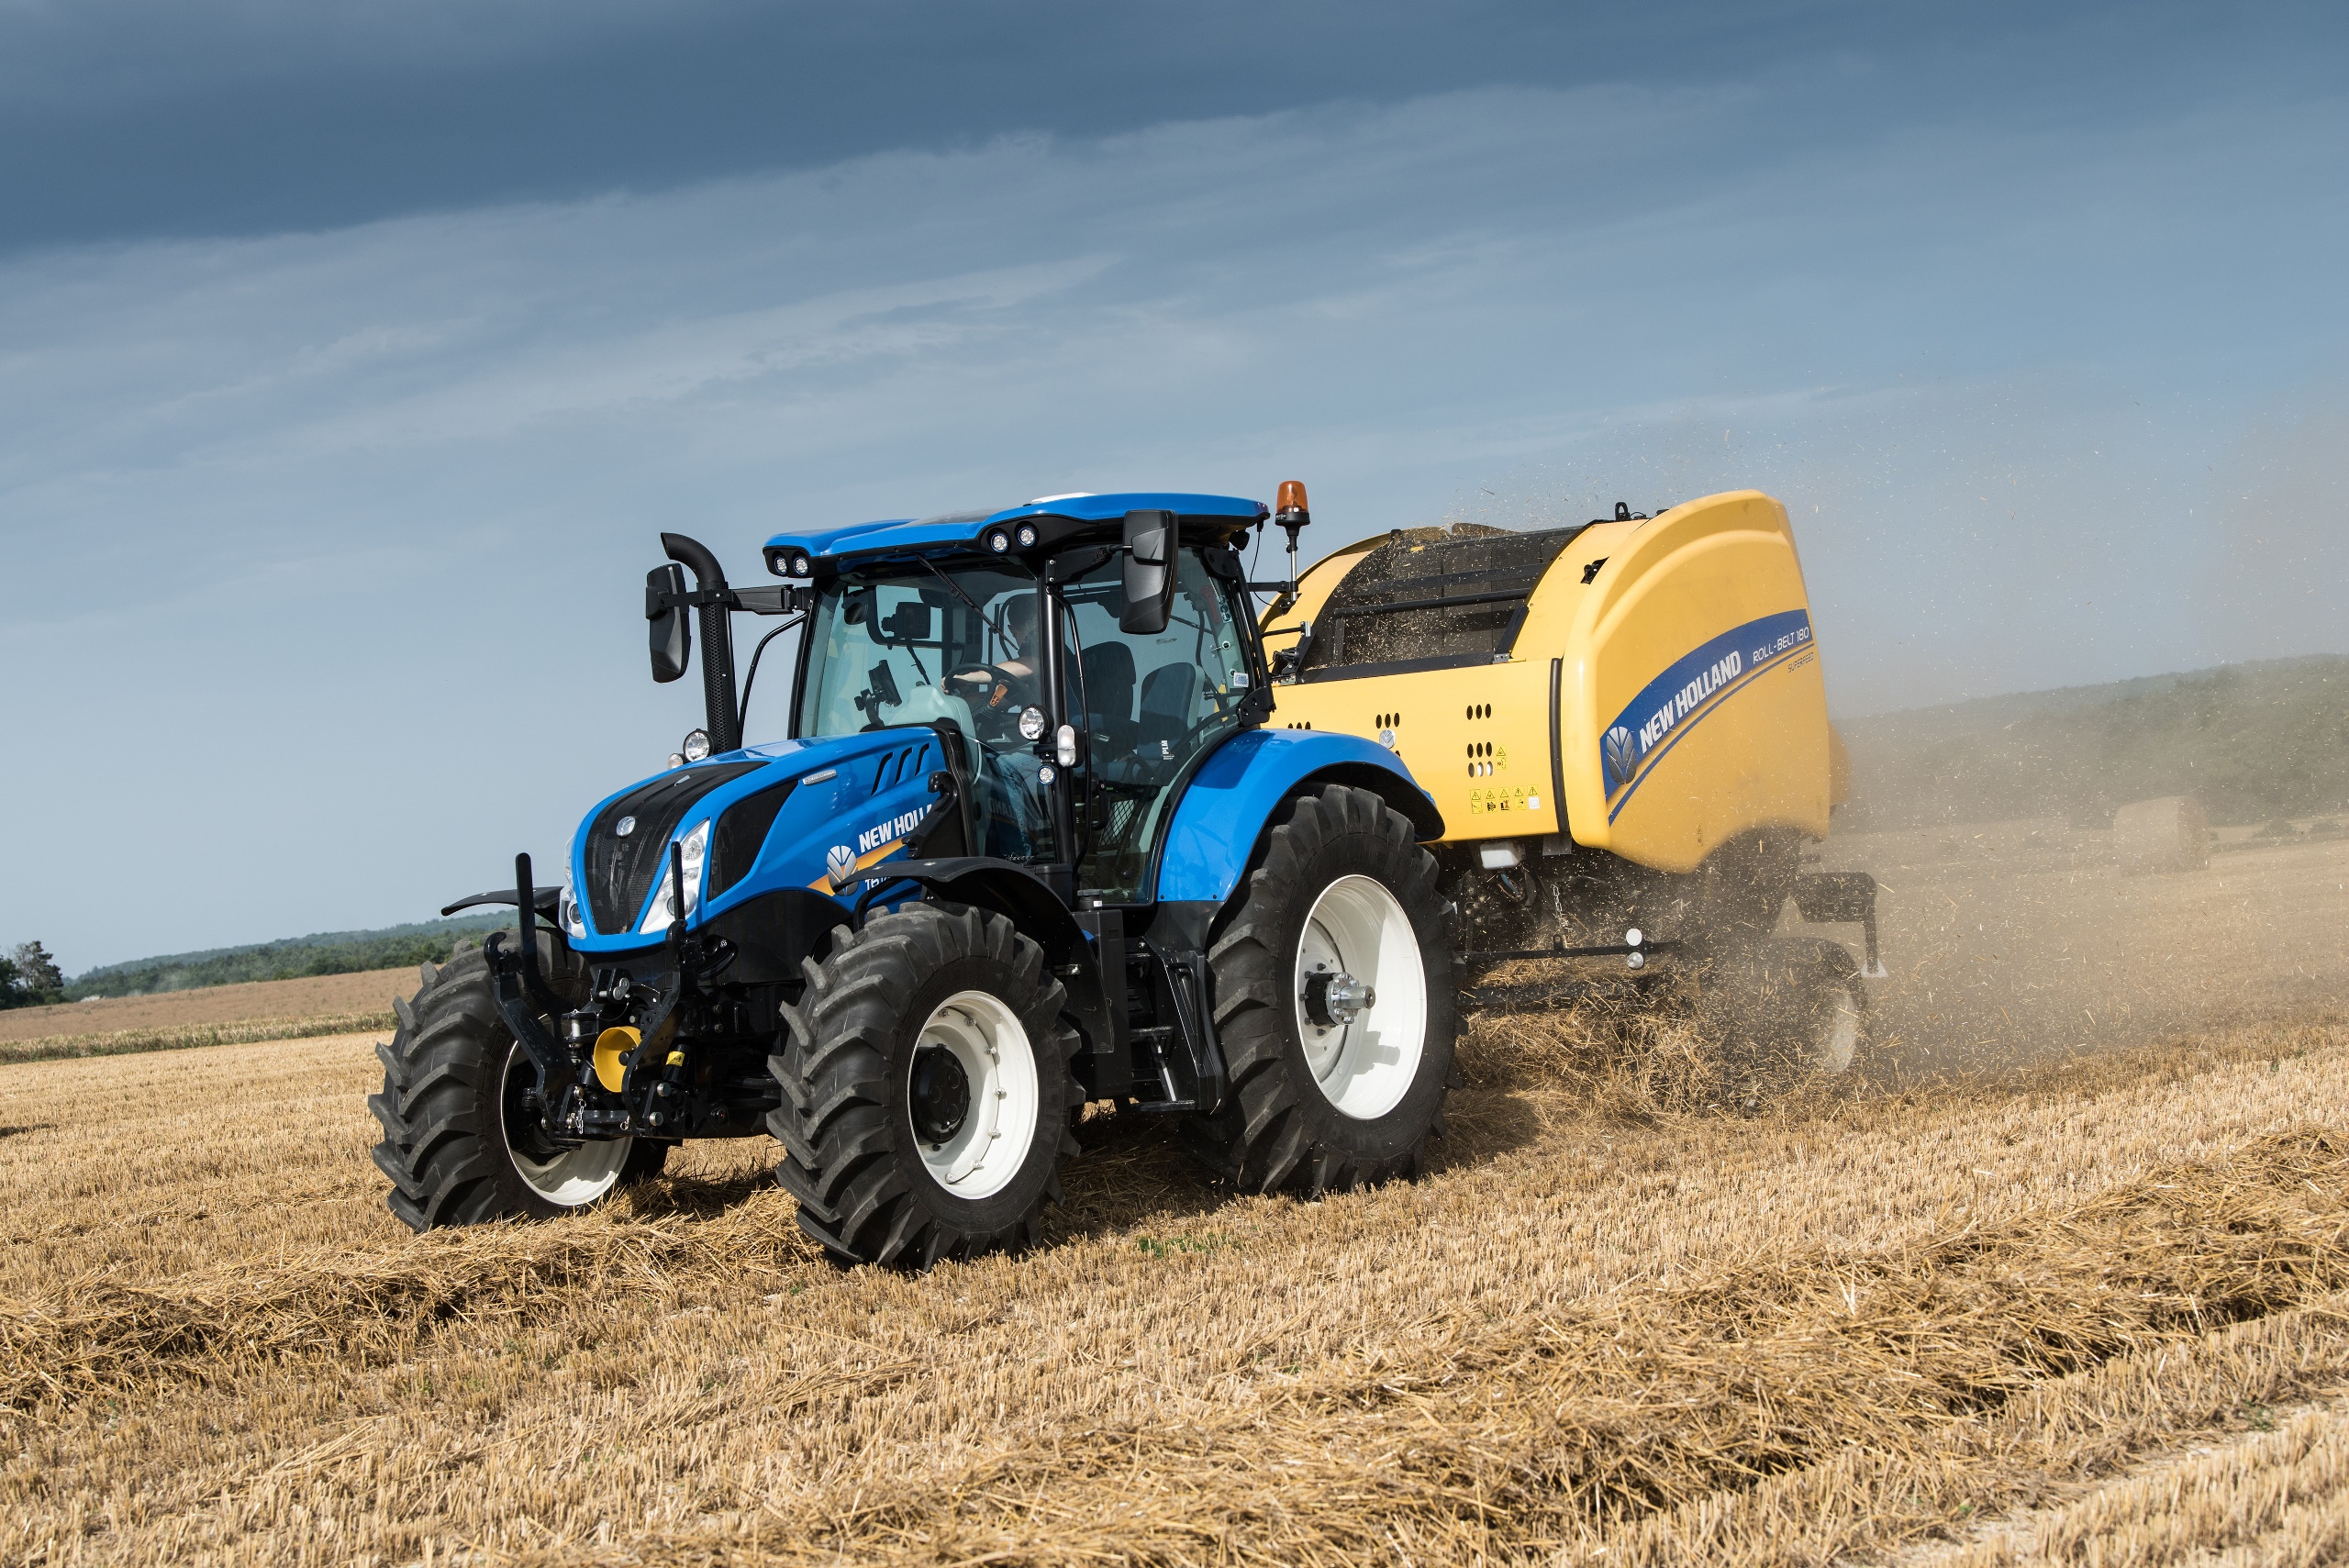 General 2560x1709 farming field tractors vehicle